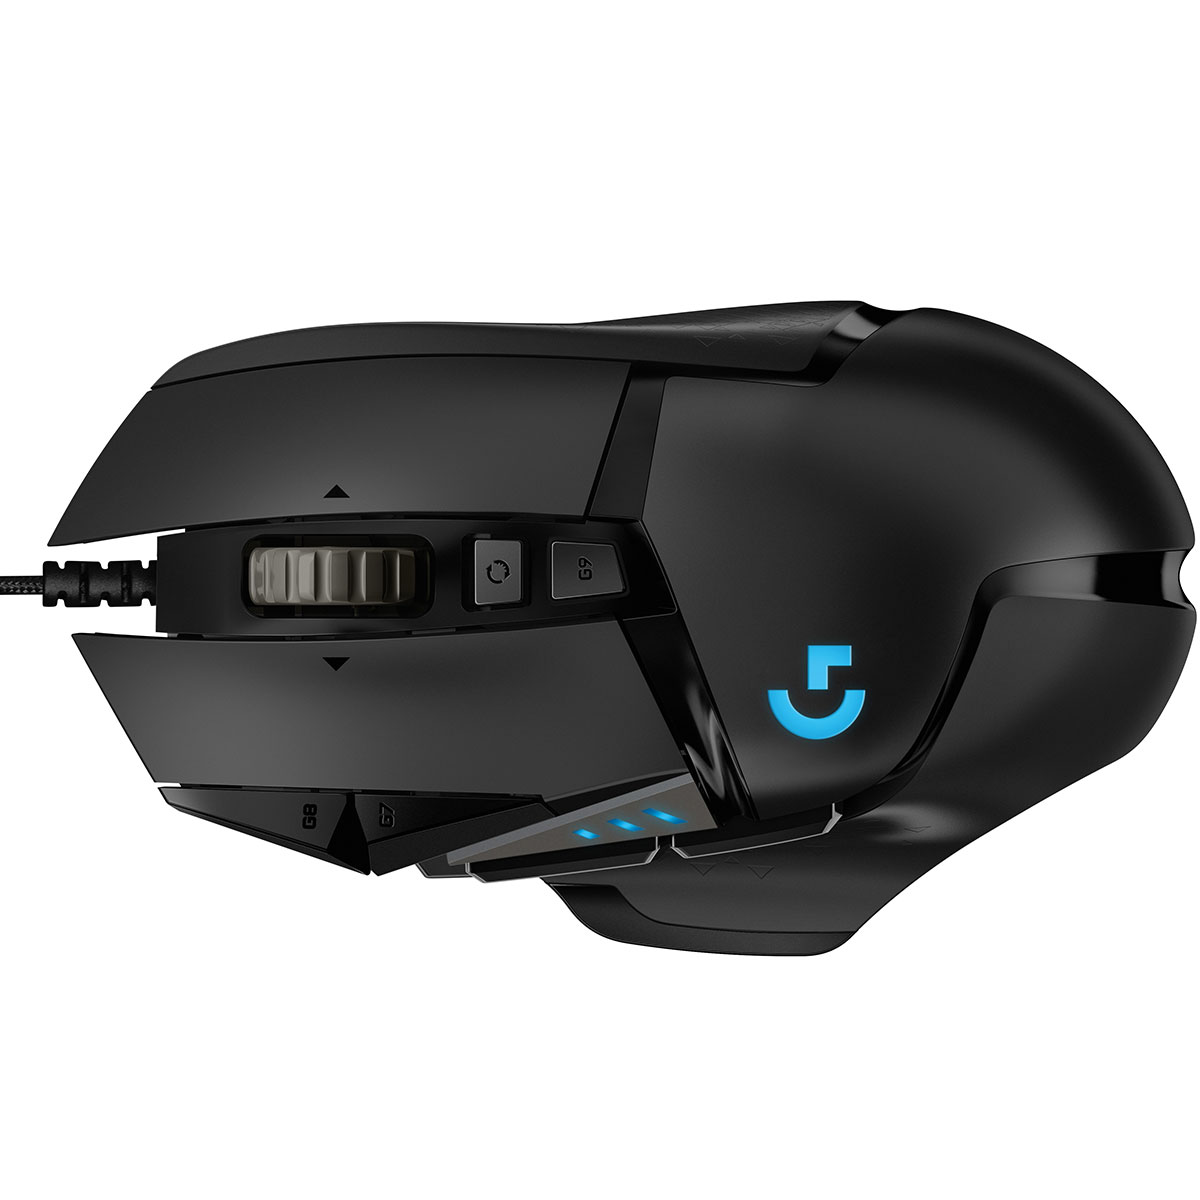 https://mombasacomputers.b-cdn.net/wp-content/uploads/2022/02/Logitech-G502-HERO-High-Performance-Gaming-Mouse-5.jpg